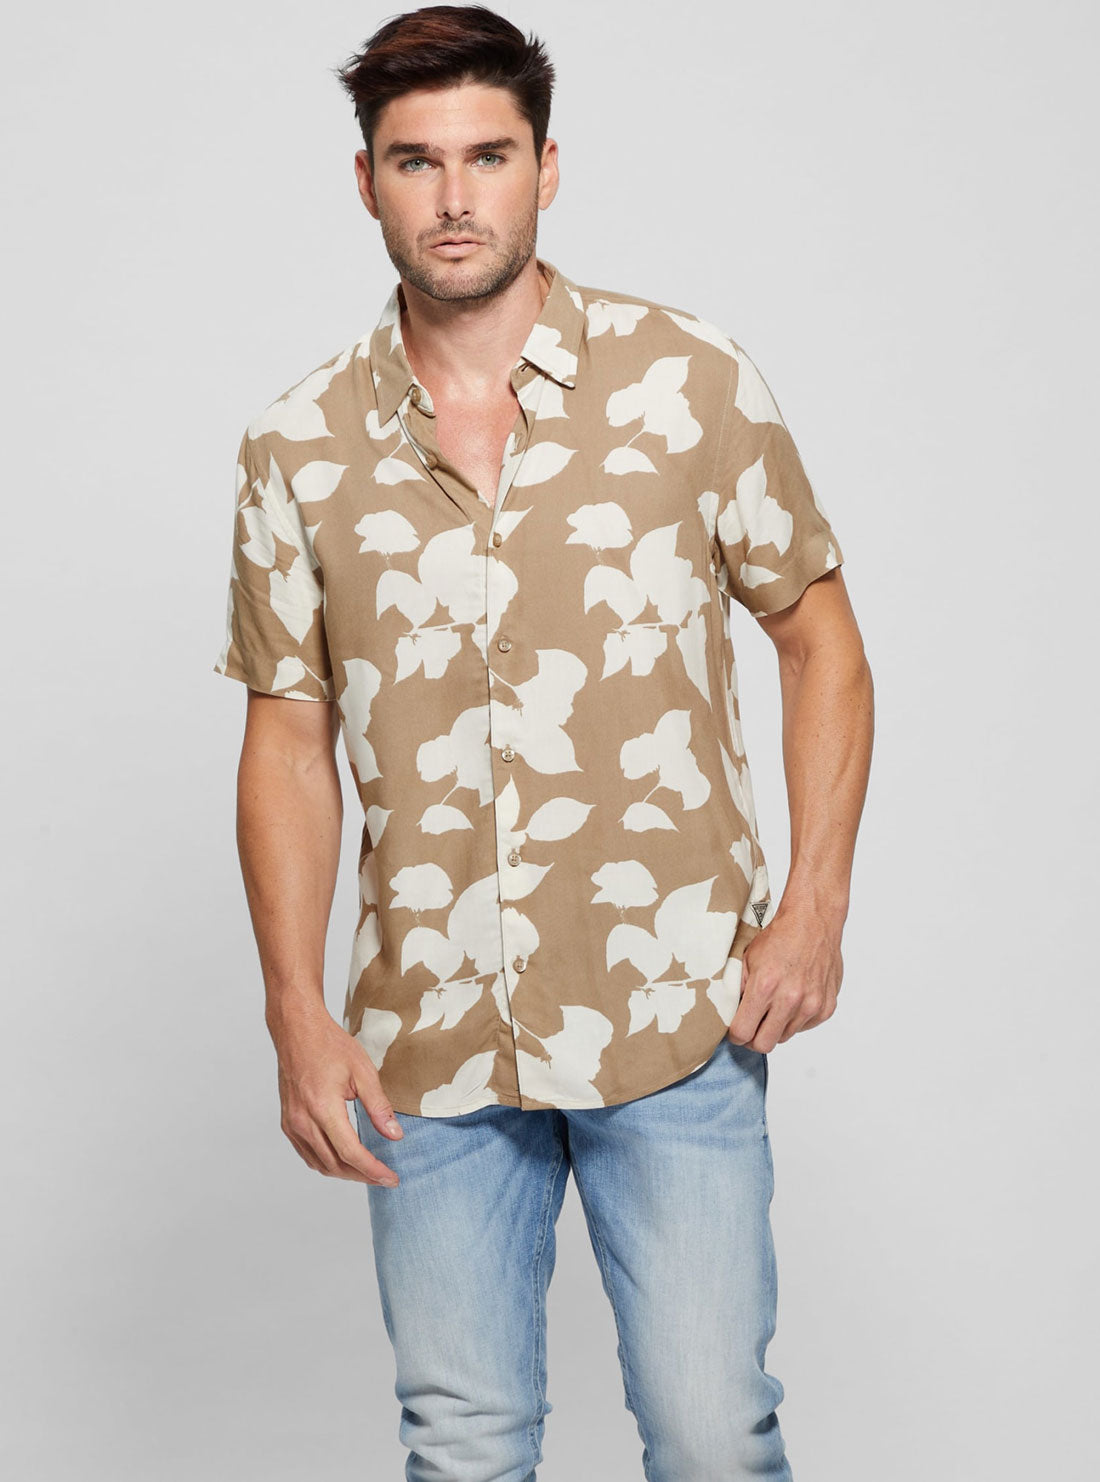 Eco Rayon Floral Print Shirt | GUESS Men's Apparel | Front view